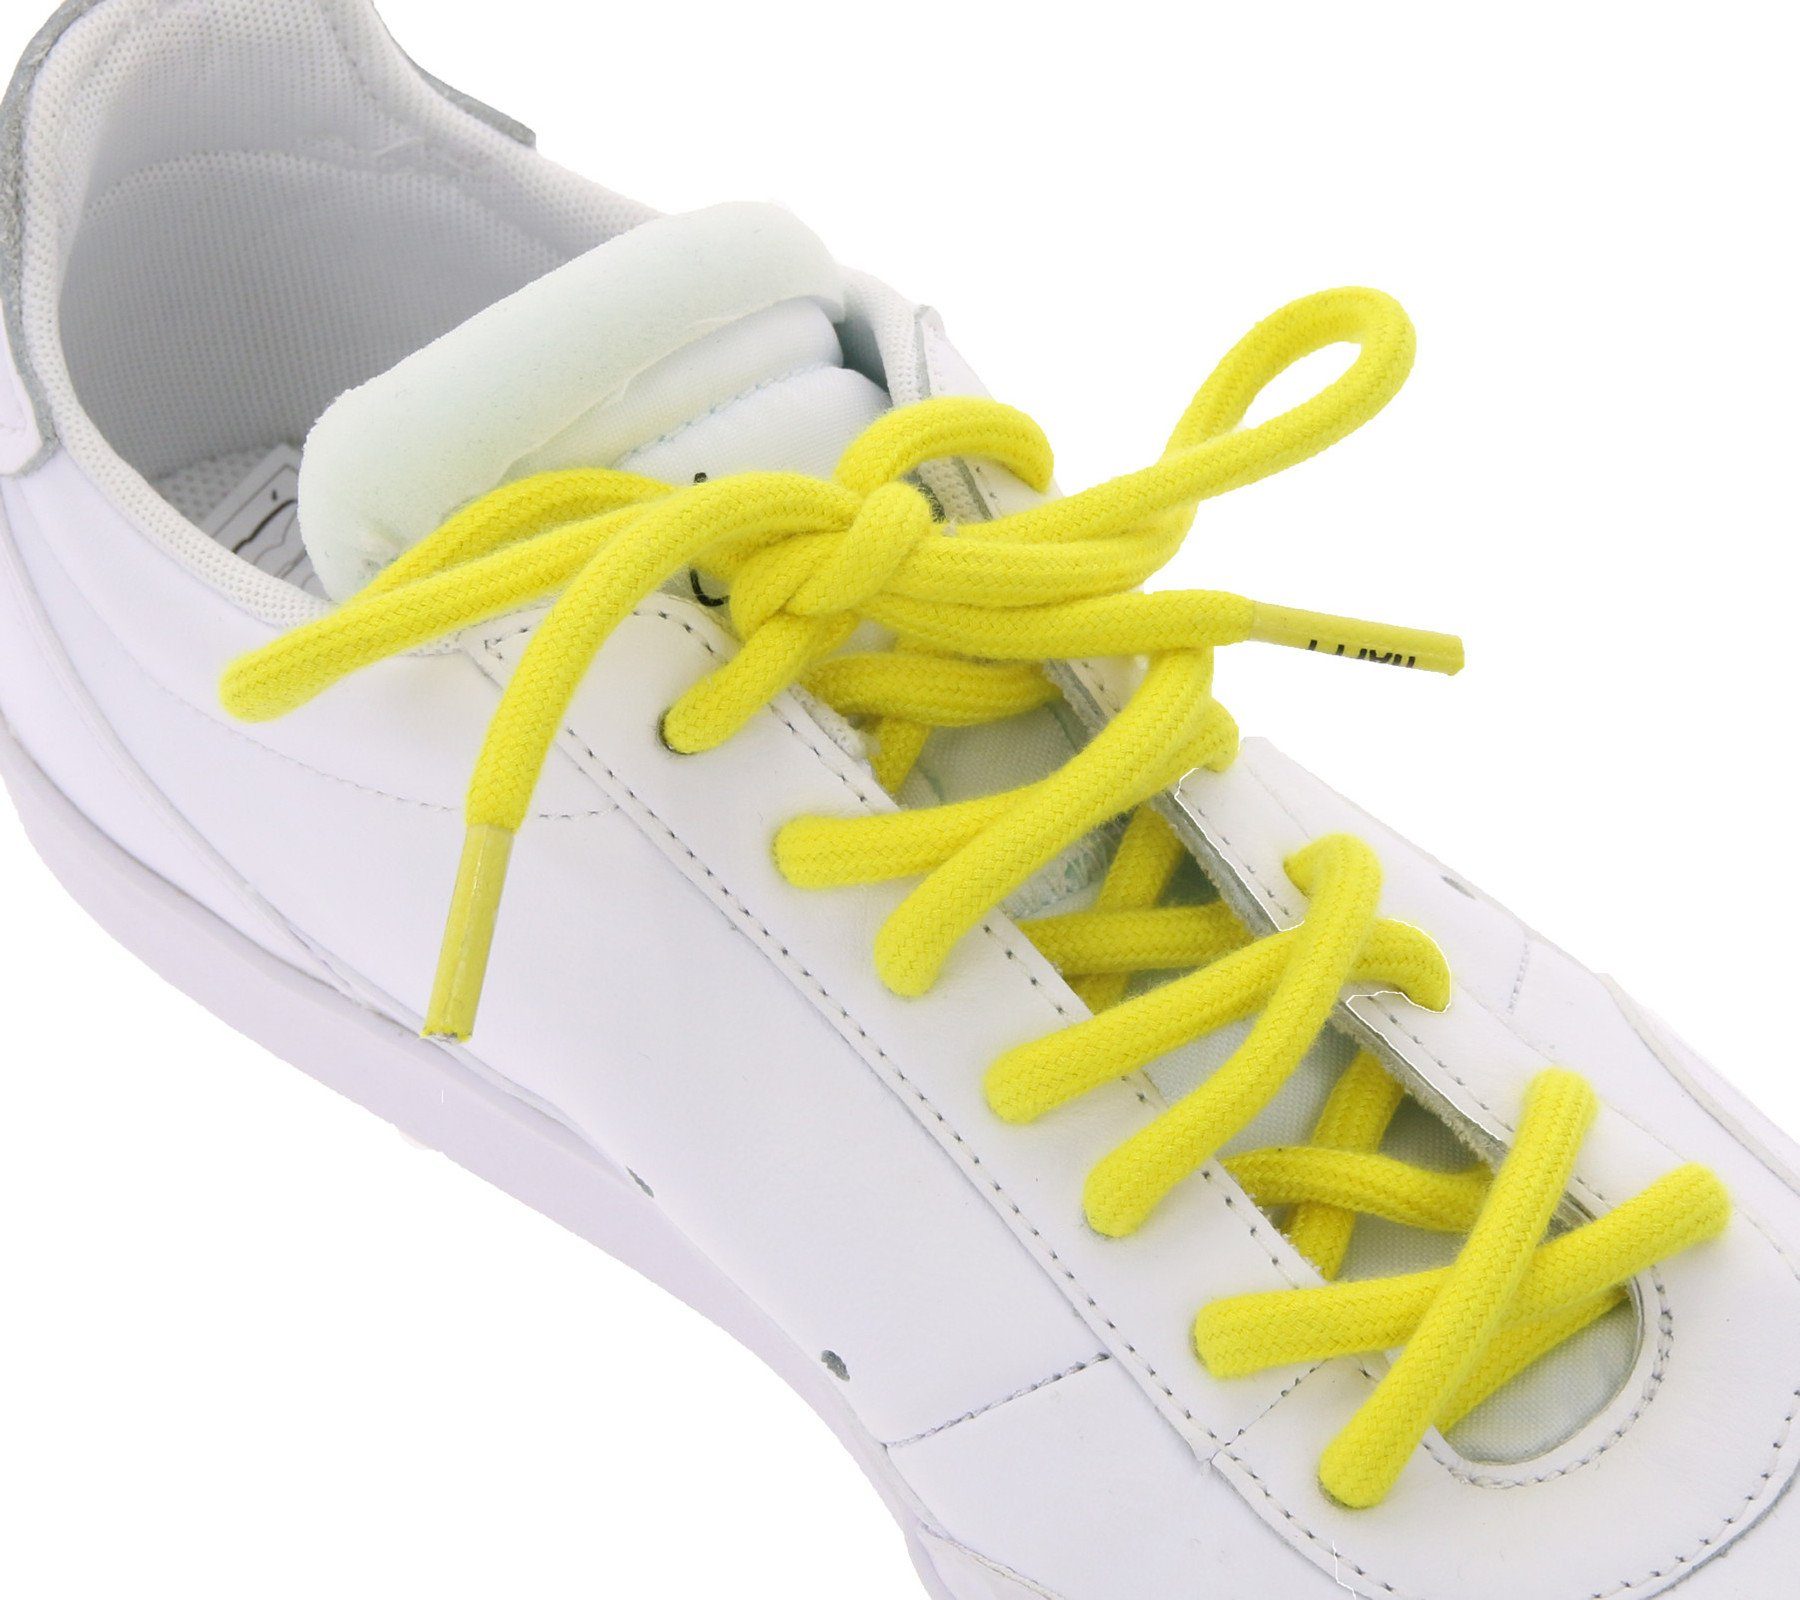 Tubelaces Schnürsenkel TubeLaces Schuhe Schnürsenkel farbenfrohe Schuhbänder Schnürbänder Happy Gelb